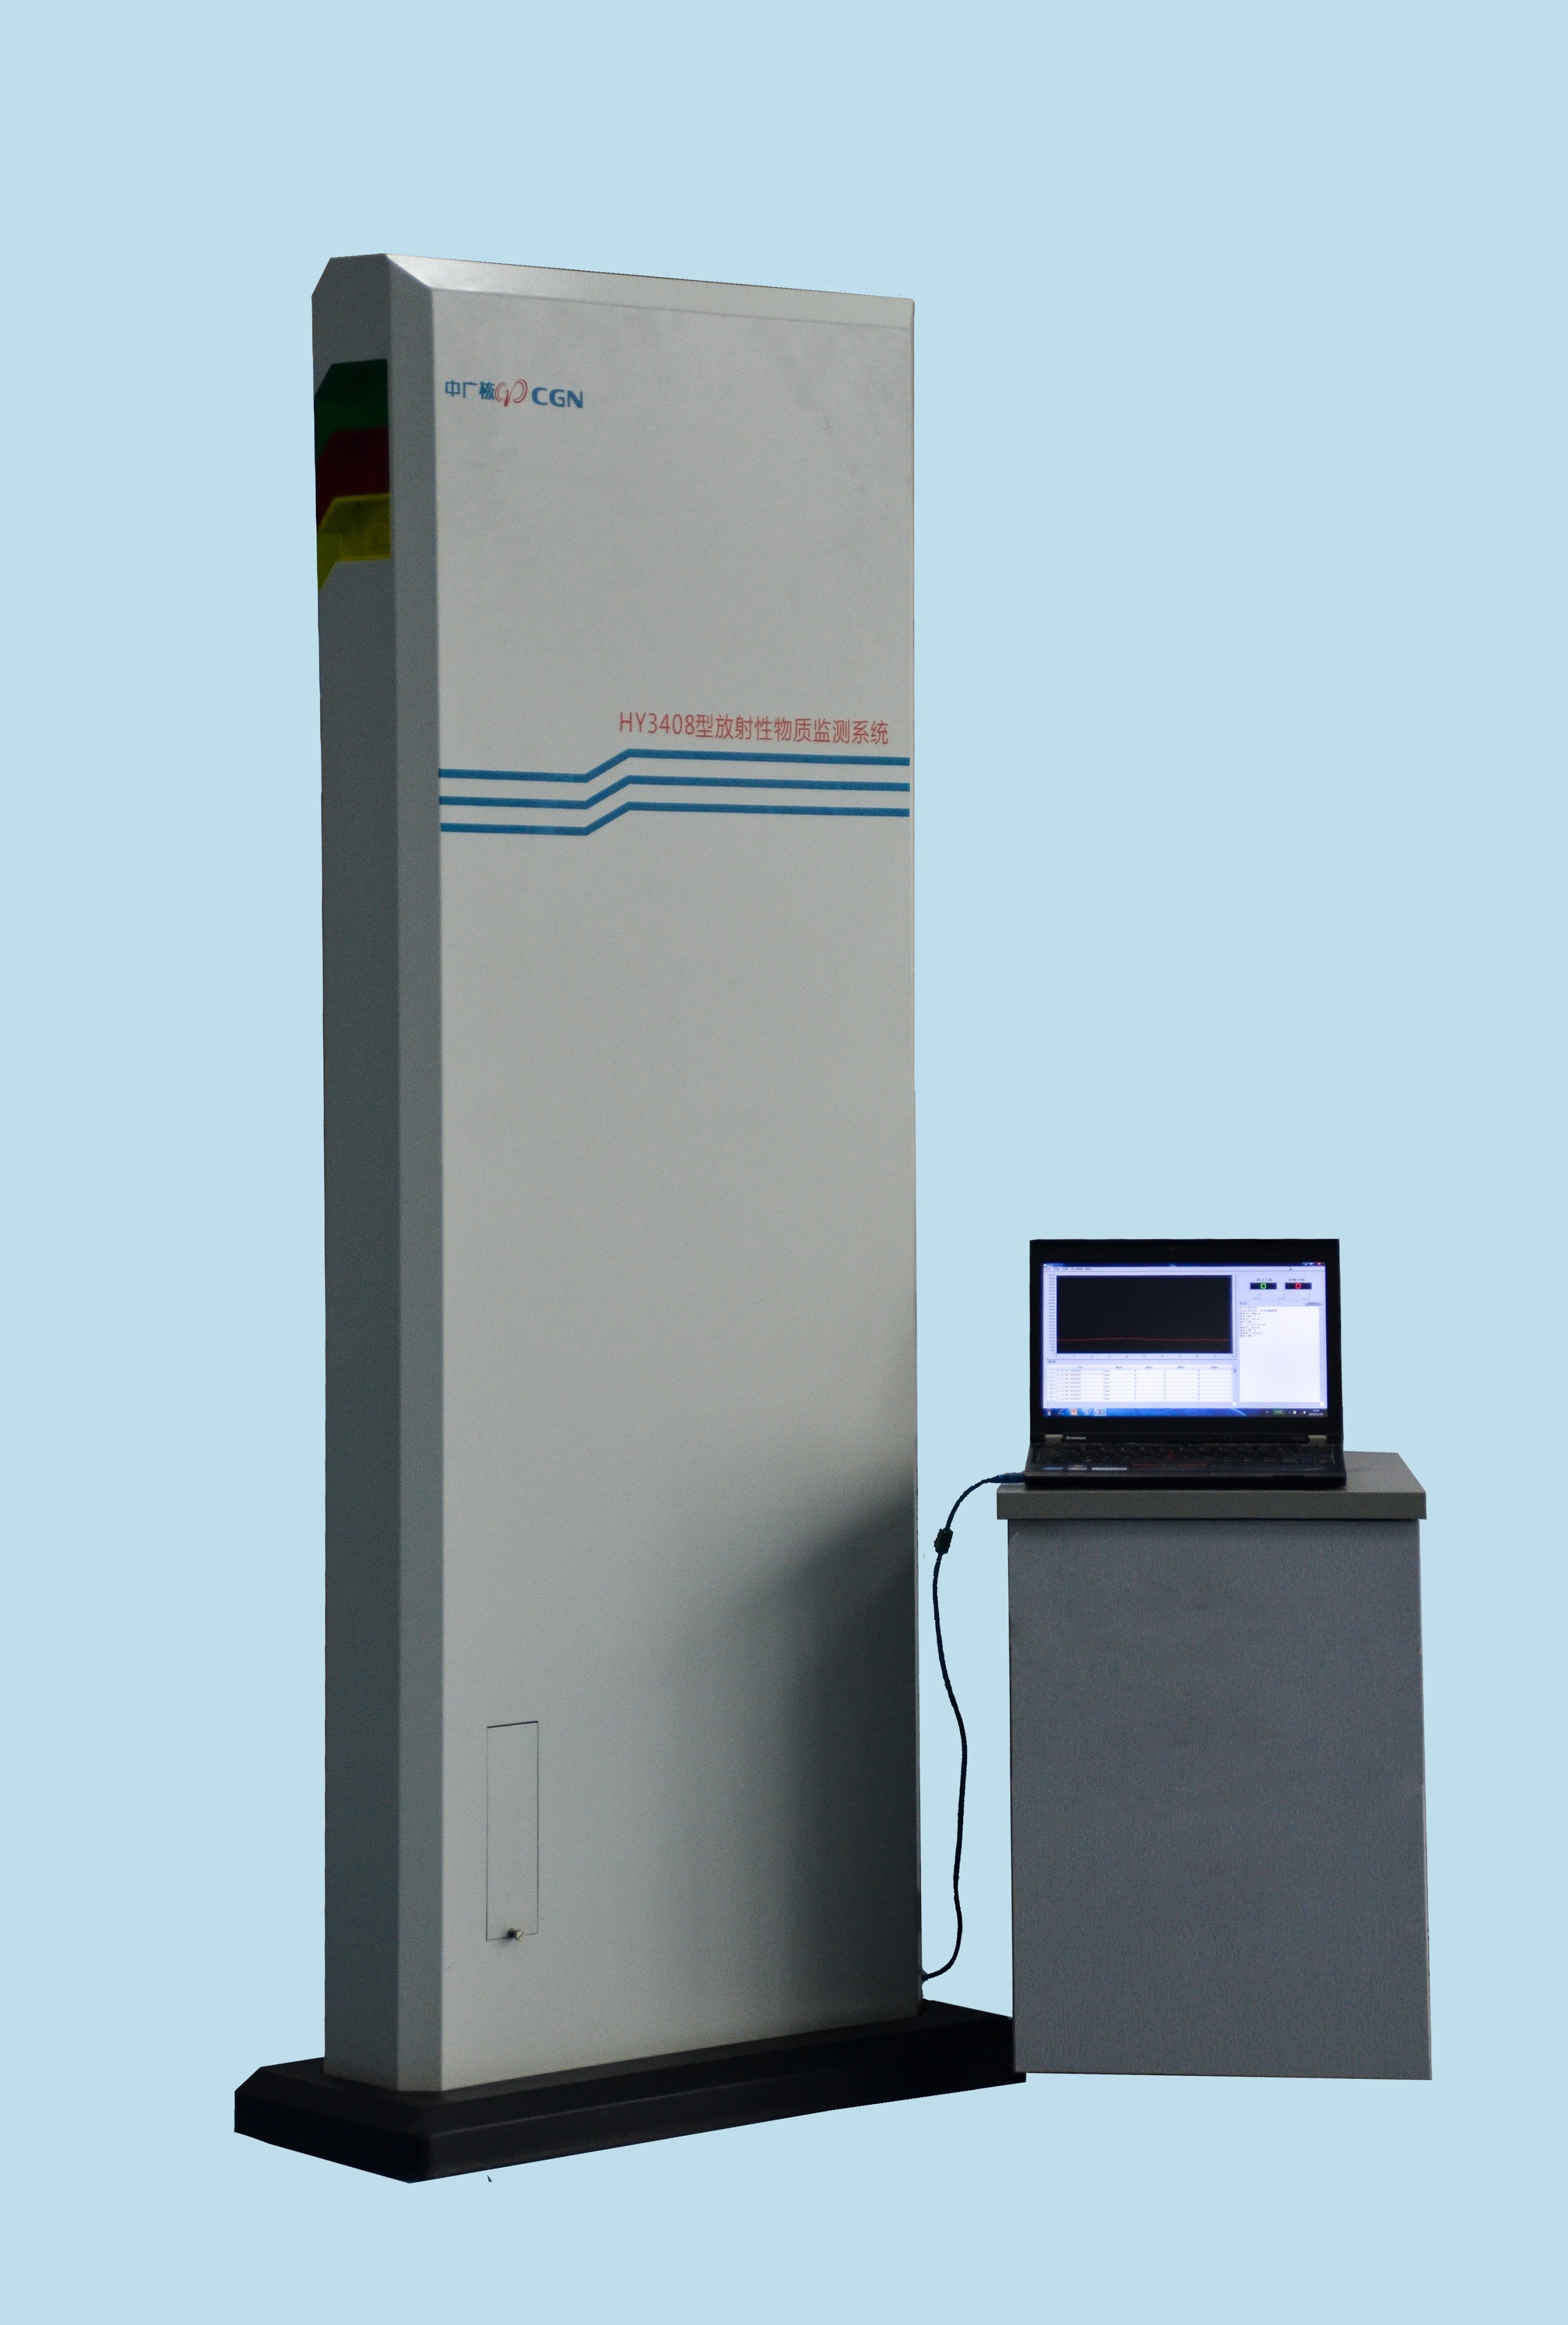 HY3408型行包放射性物质监测系统